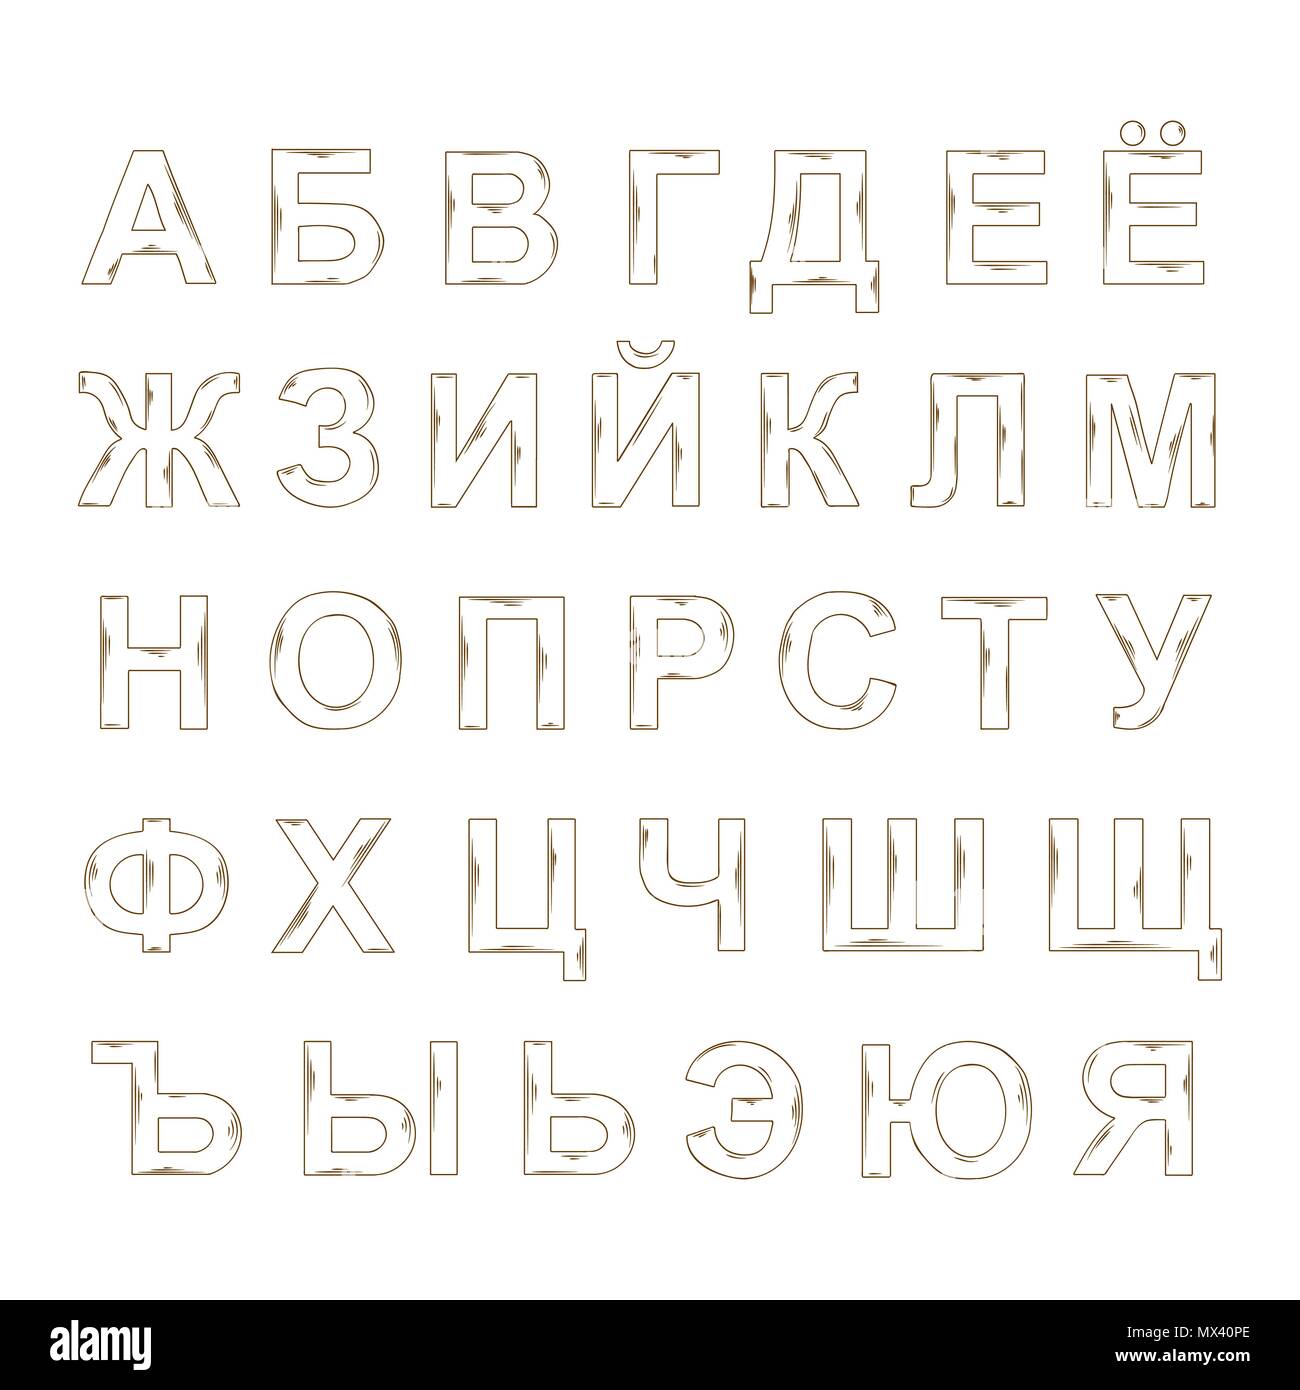 The Russian Alphabet Lore! [Demo!] 